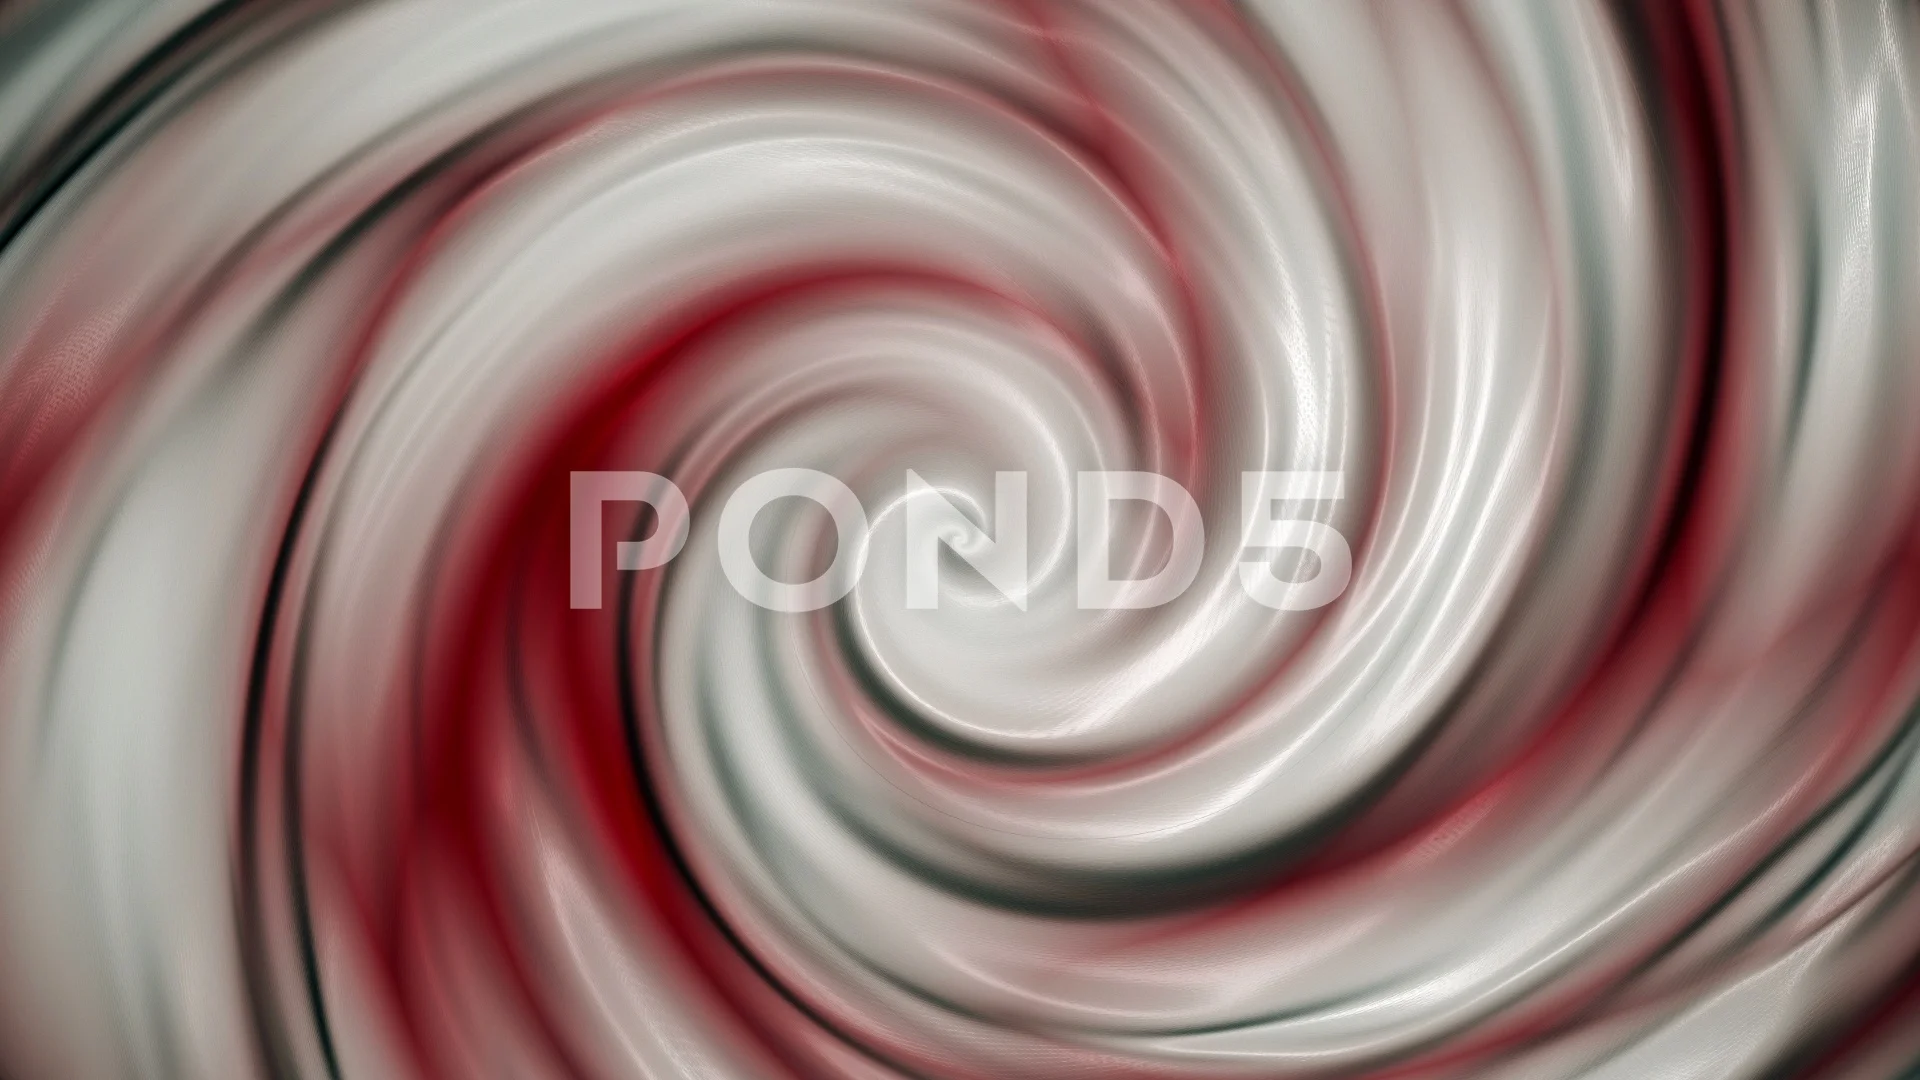 https://images.pond5.com/hypnotic-liquid-spiral-motion-background-footage-122689927_prevstill.jpeg